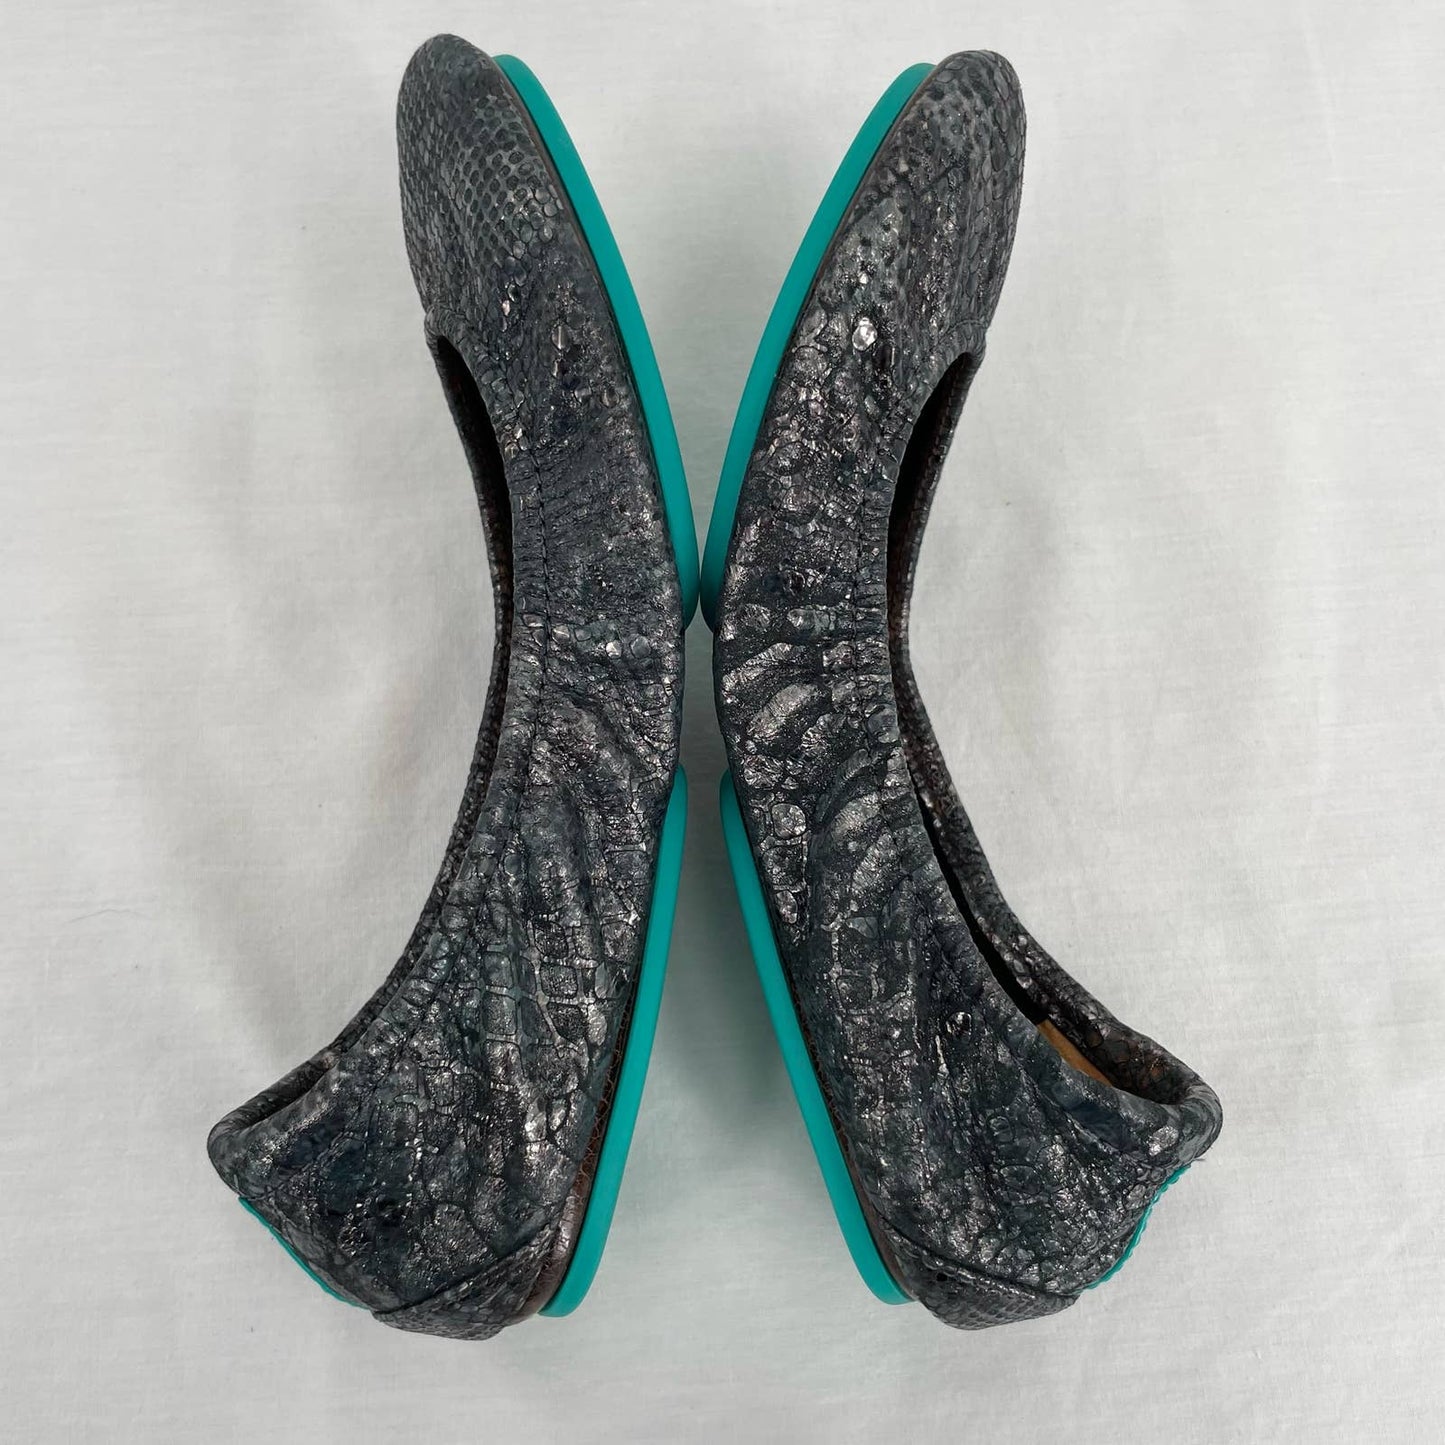 Tieks Drago Black Leather Ballet Flats Snakeskin Dragon Shiny Metallic Foil Shoe Size 6